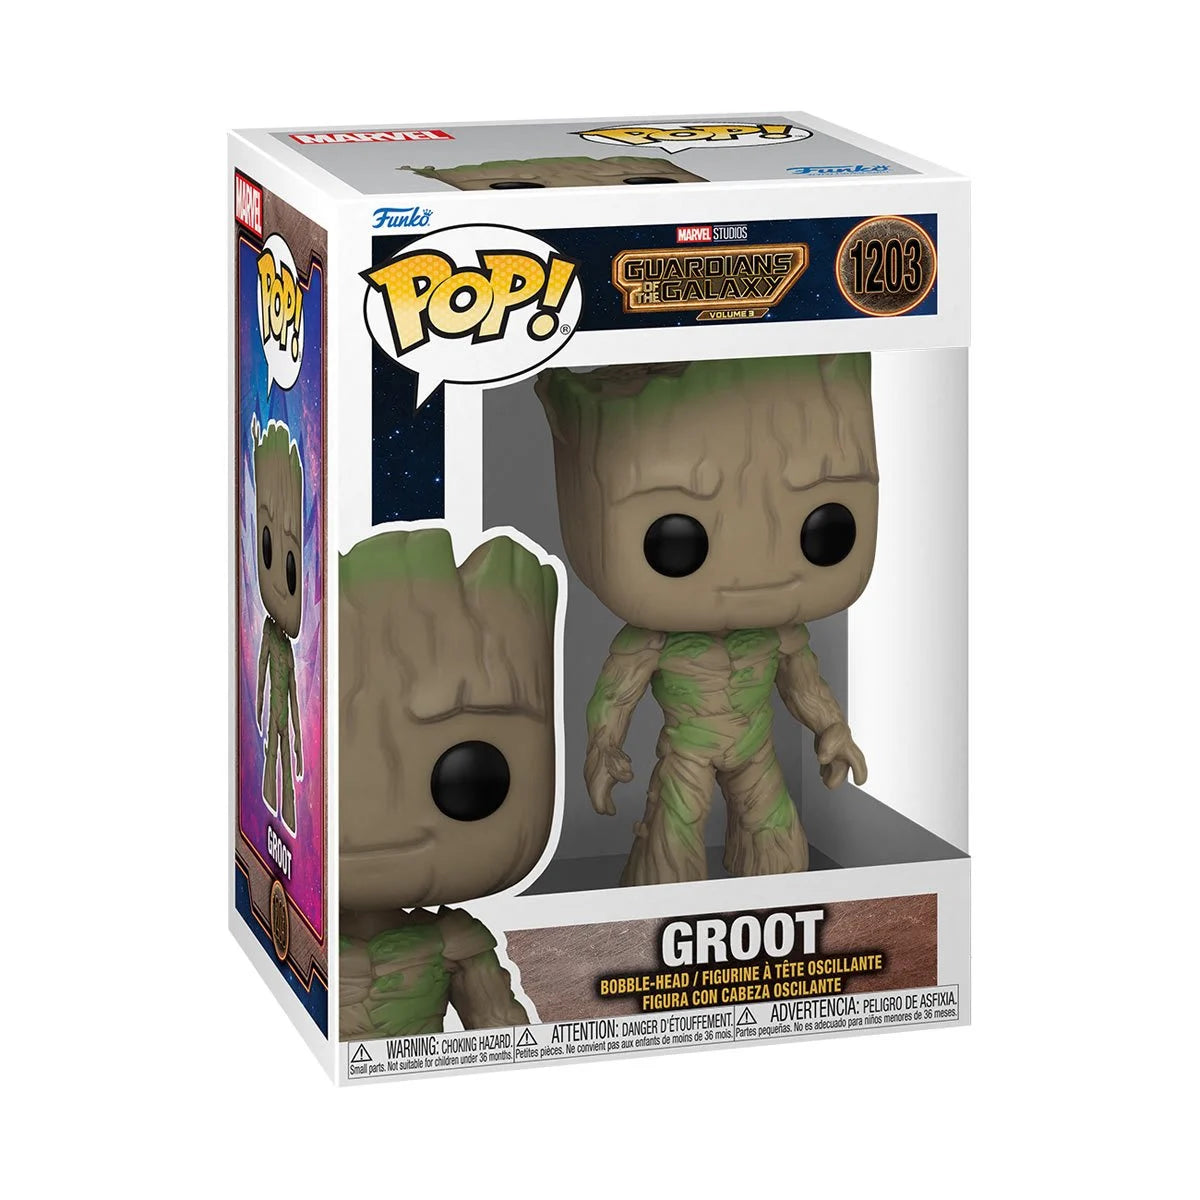 Groot Guardians of the Galaxy Volume 3 Pop! Vinyl Figure